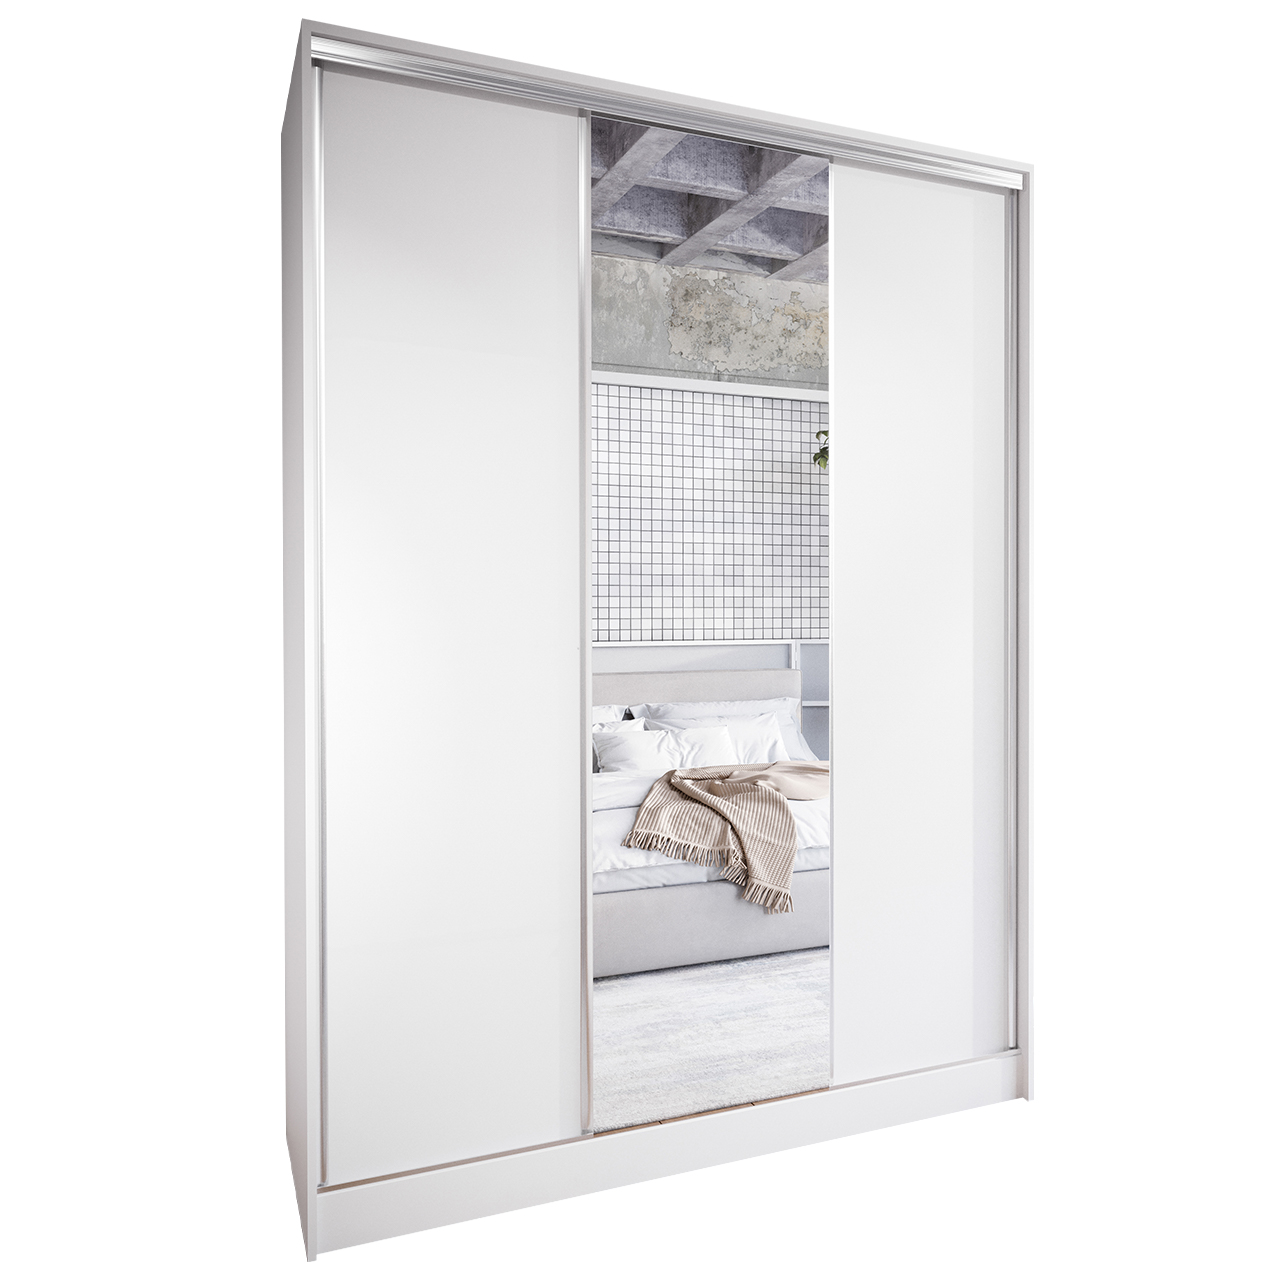 Sliding Wardrobe with Mirror and Drawers CORINA C 150 white